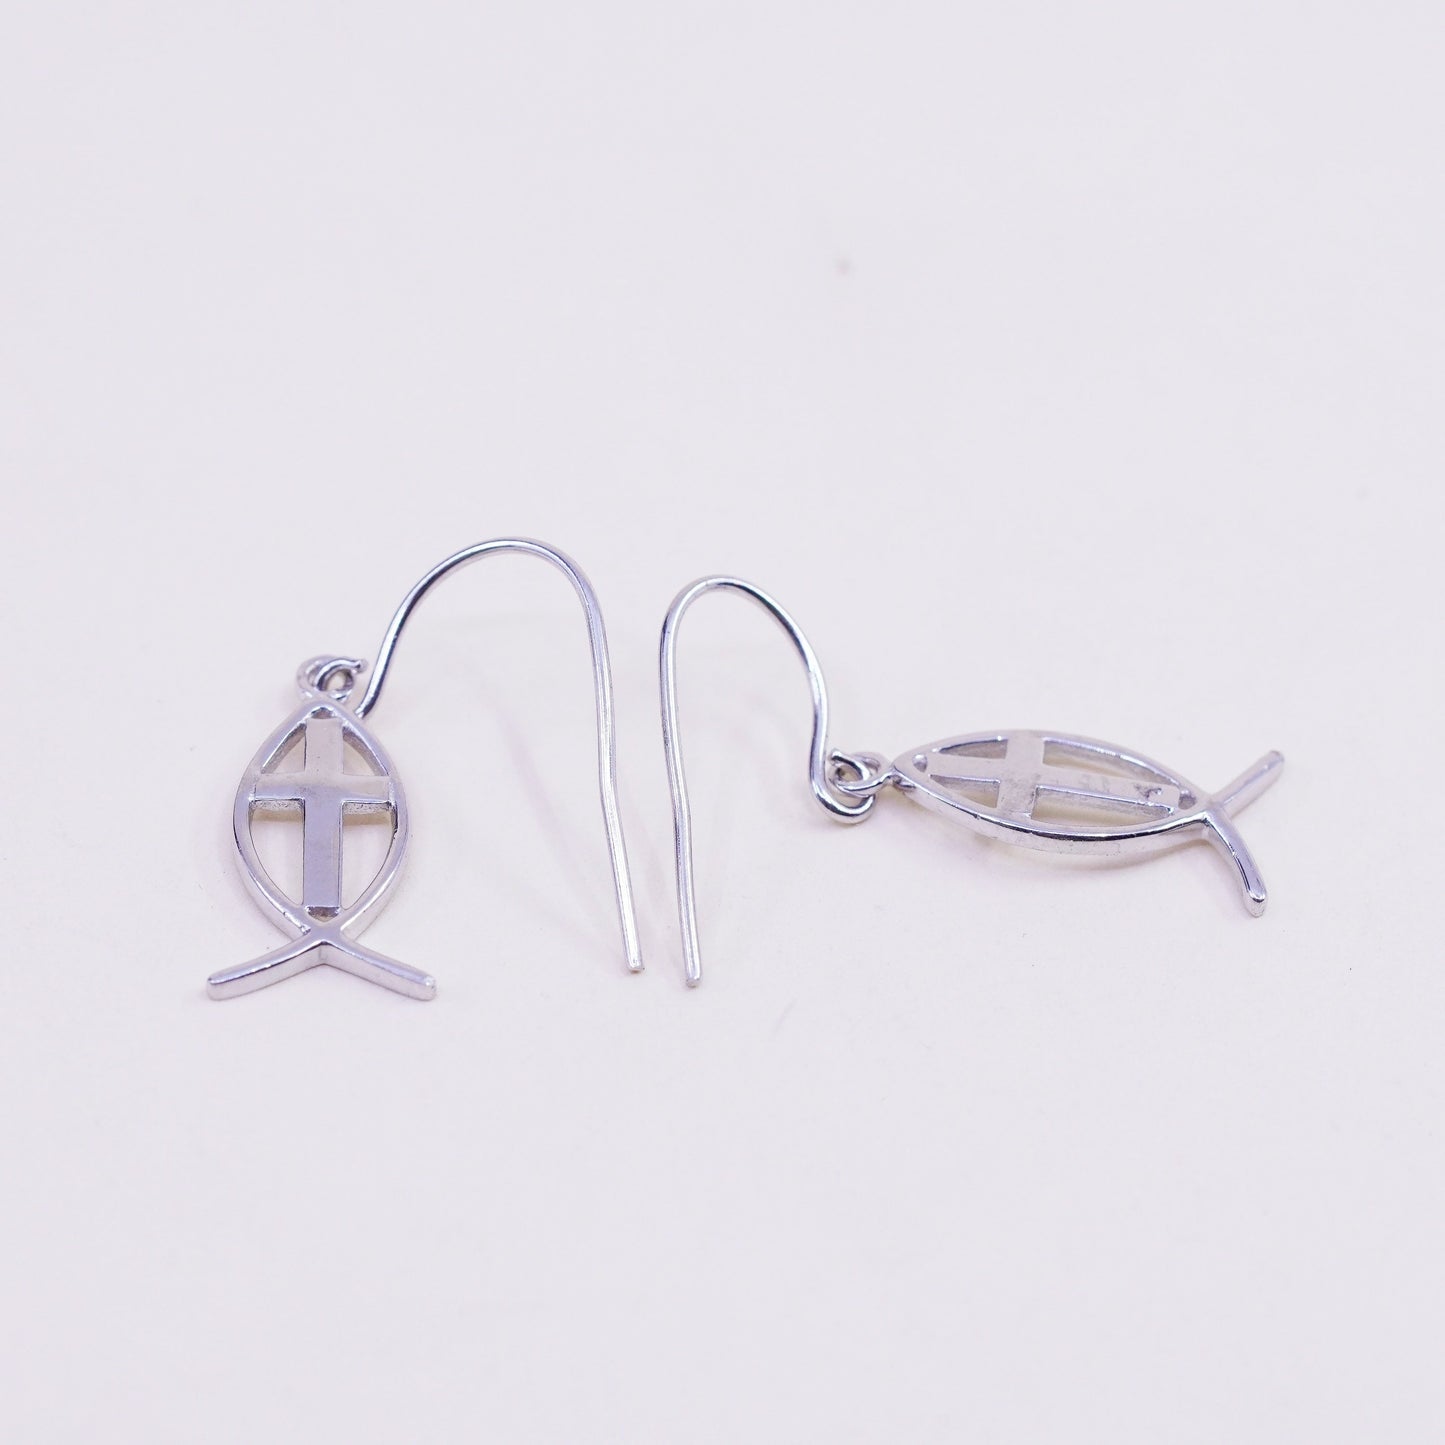 Vintage sterling silver handmade modern earrings, 925 fish with cross